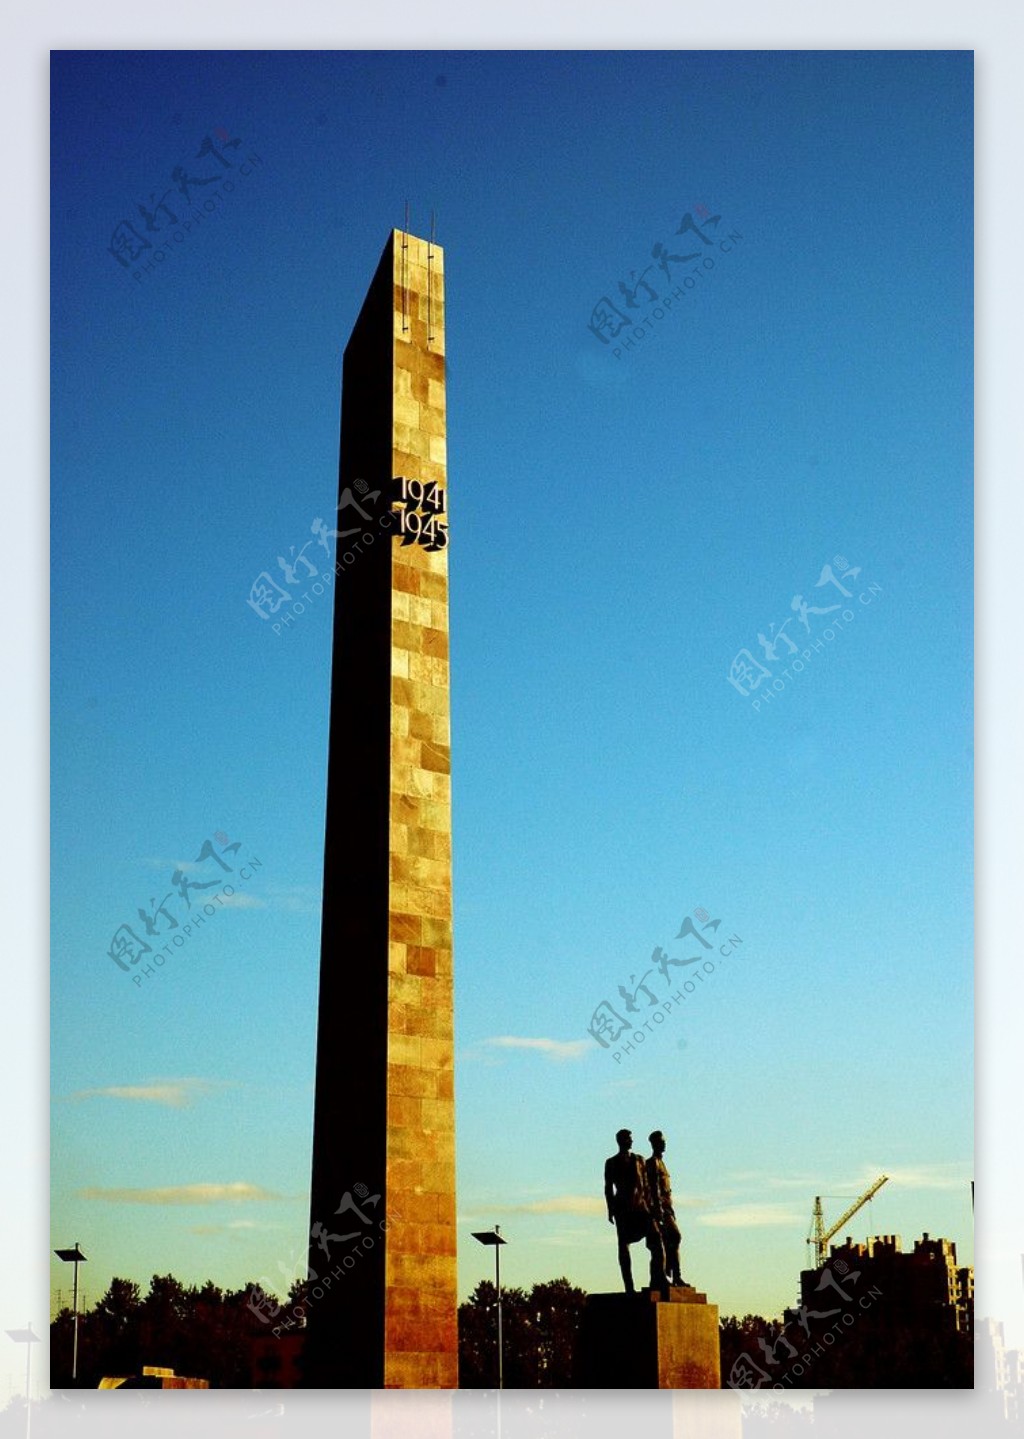 二战英雄纪念碑图片